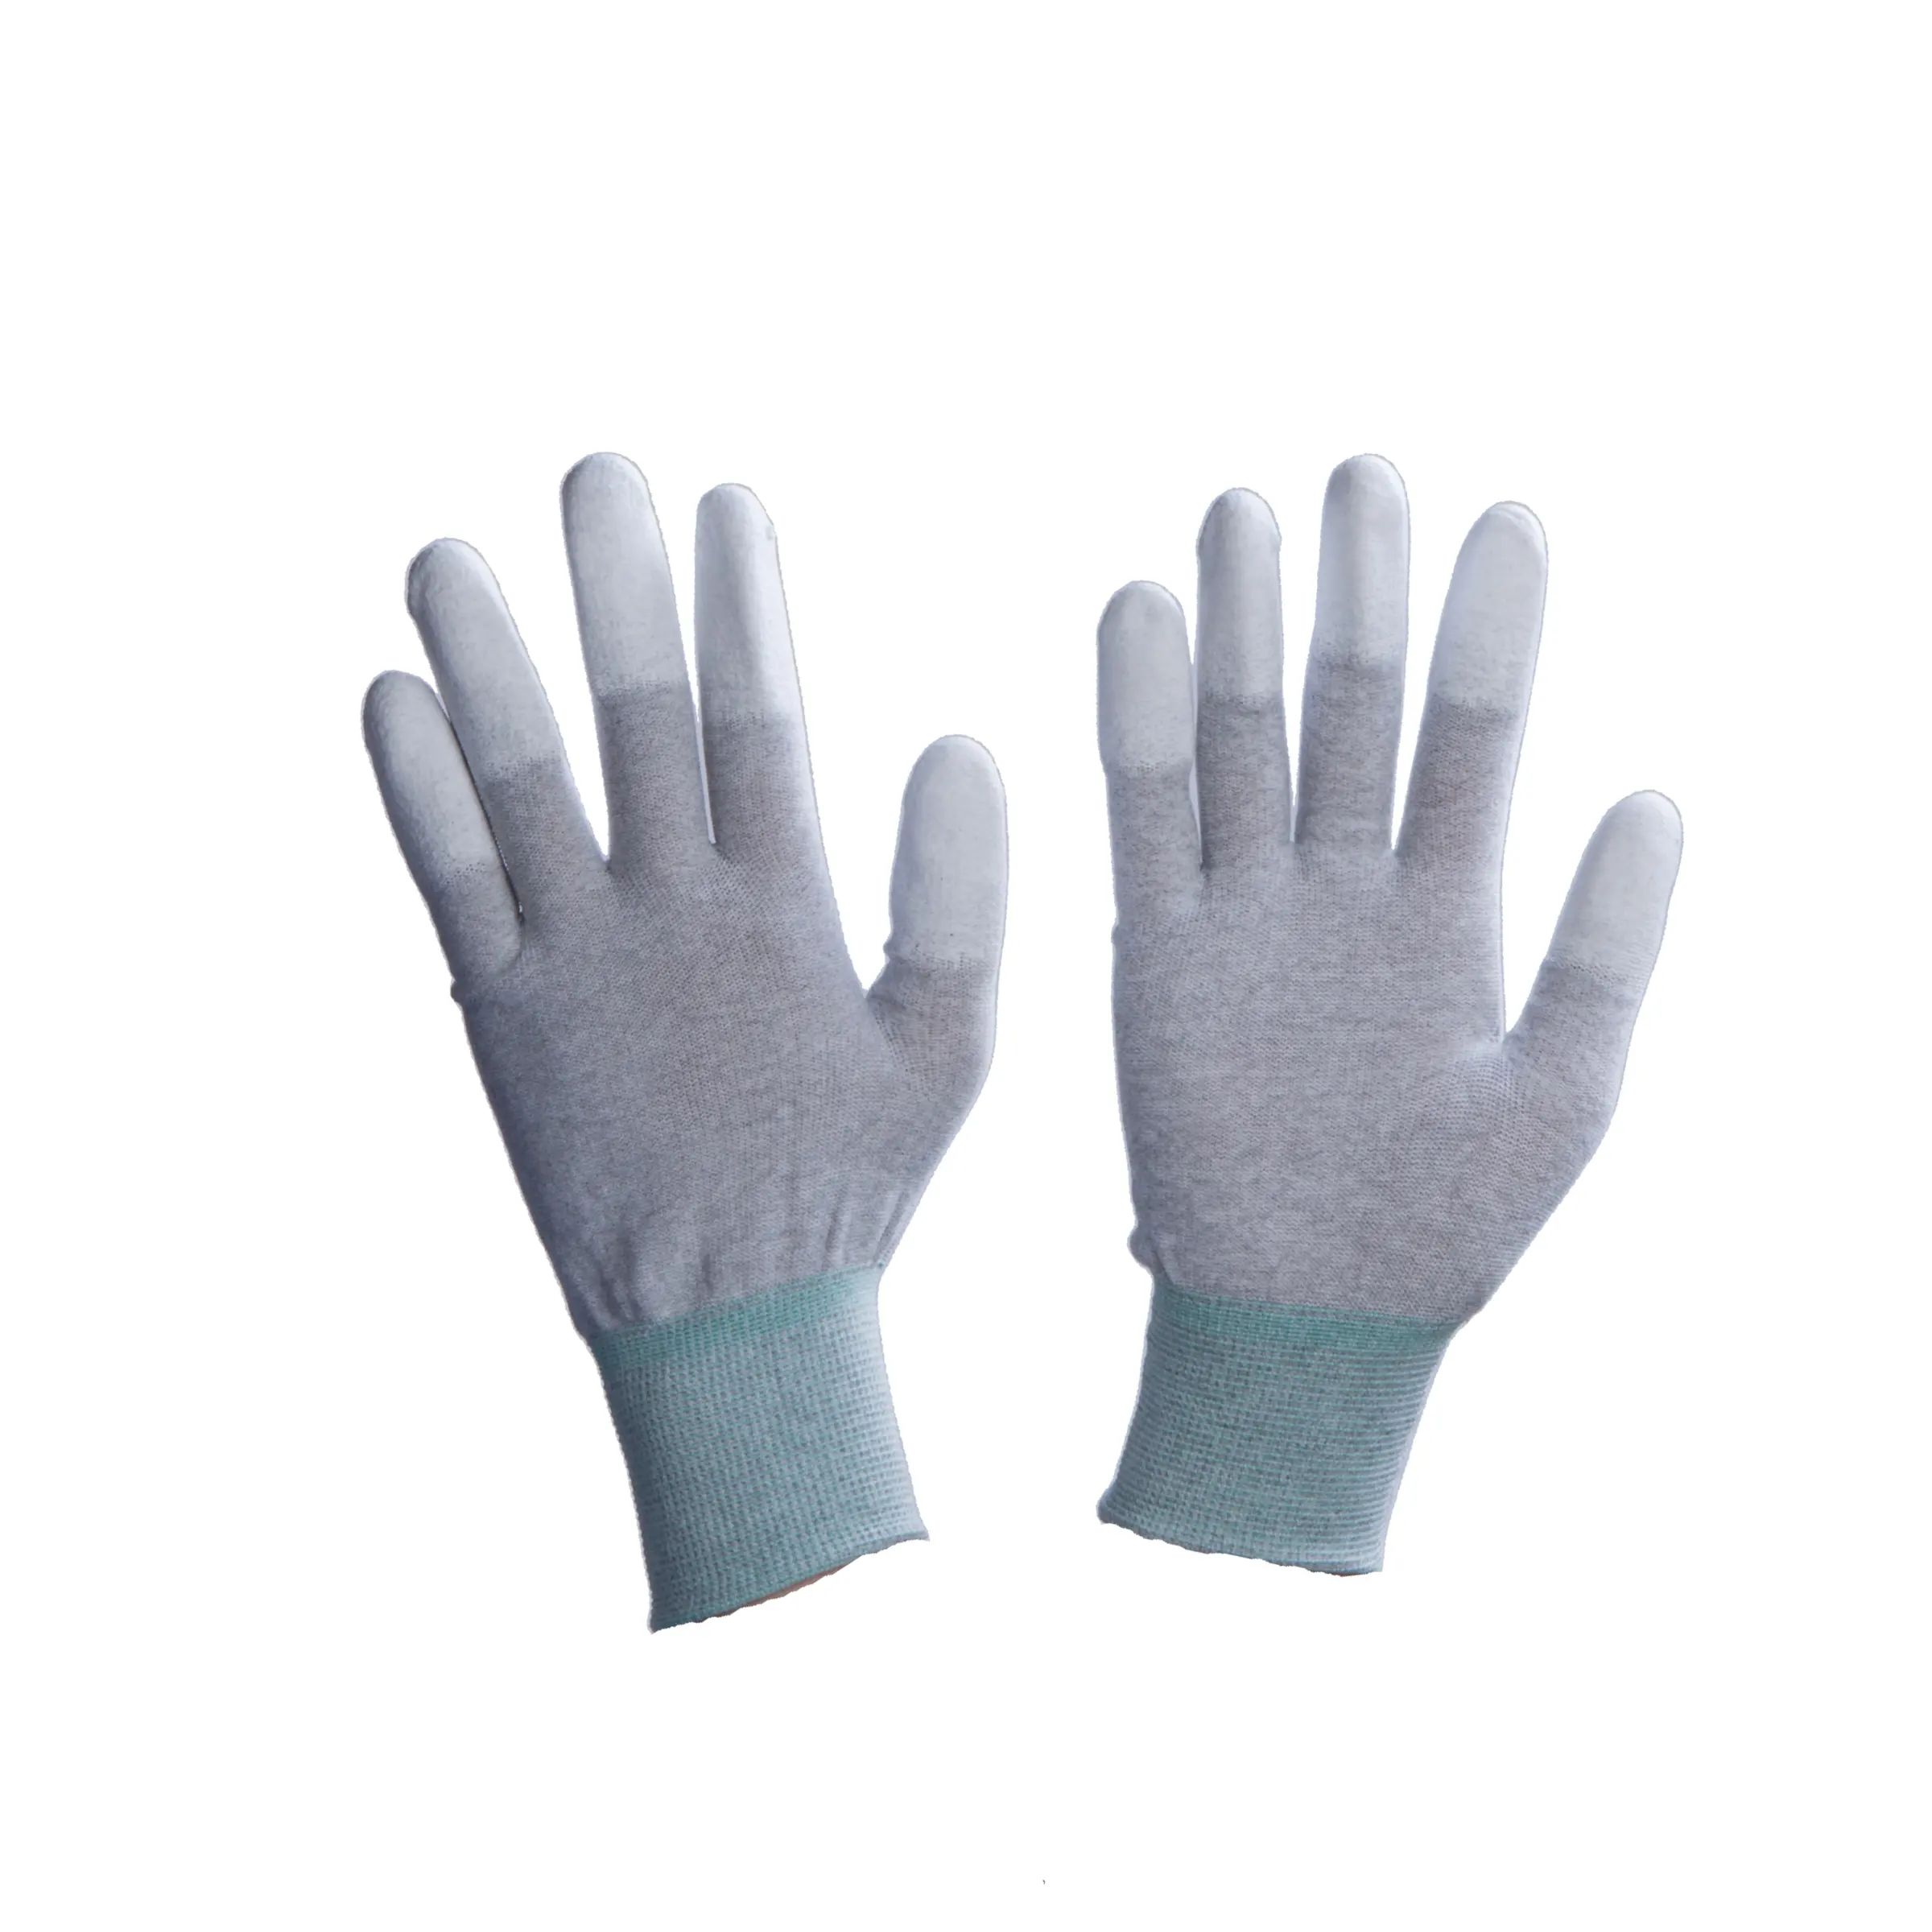 Sarung tangan ESD ujung jari berlapis PU, sarung tangan Anti statis serat karbon lapis atas elastis nyaman, sarung tangan ruangan bersih